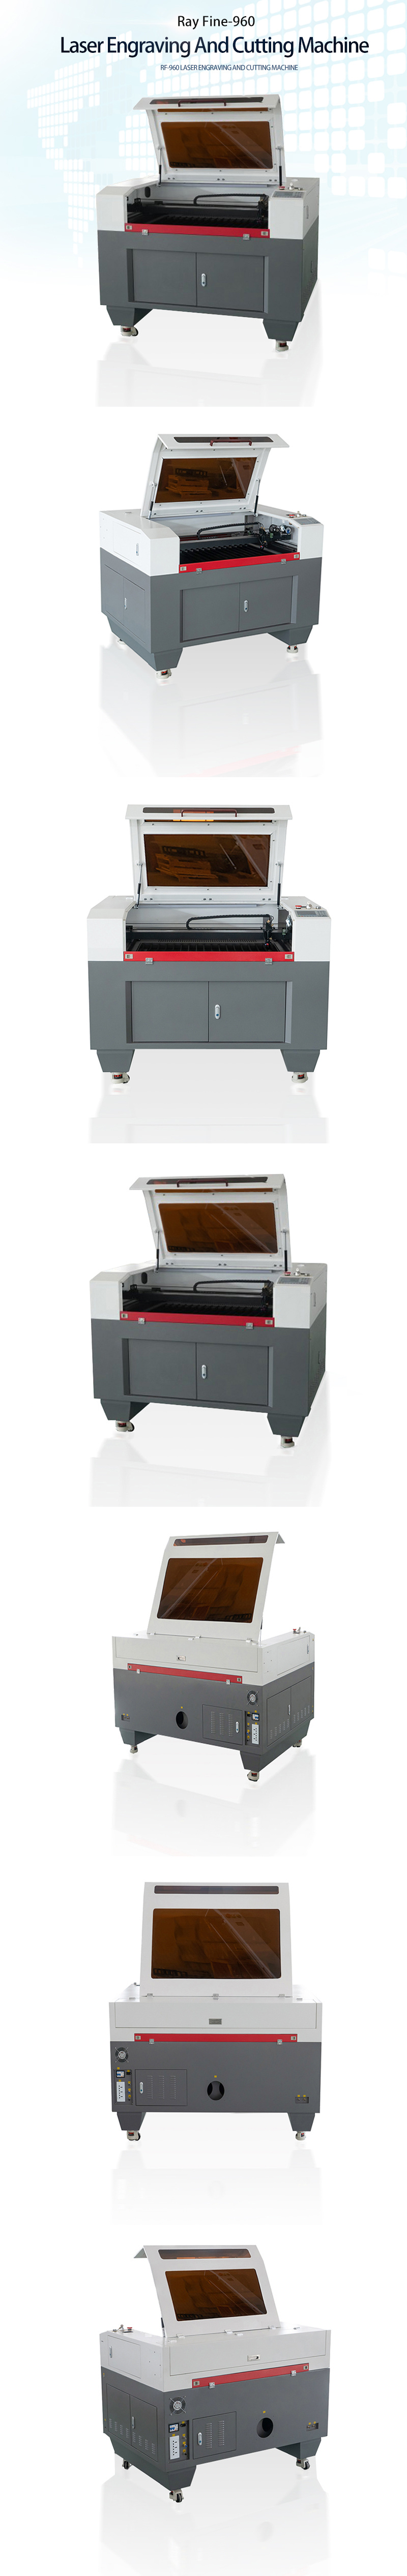 Rayfine 6090 Laser Engraving Cutting Machine with Reci Laser Tube